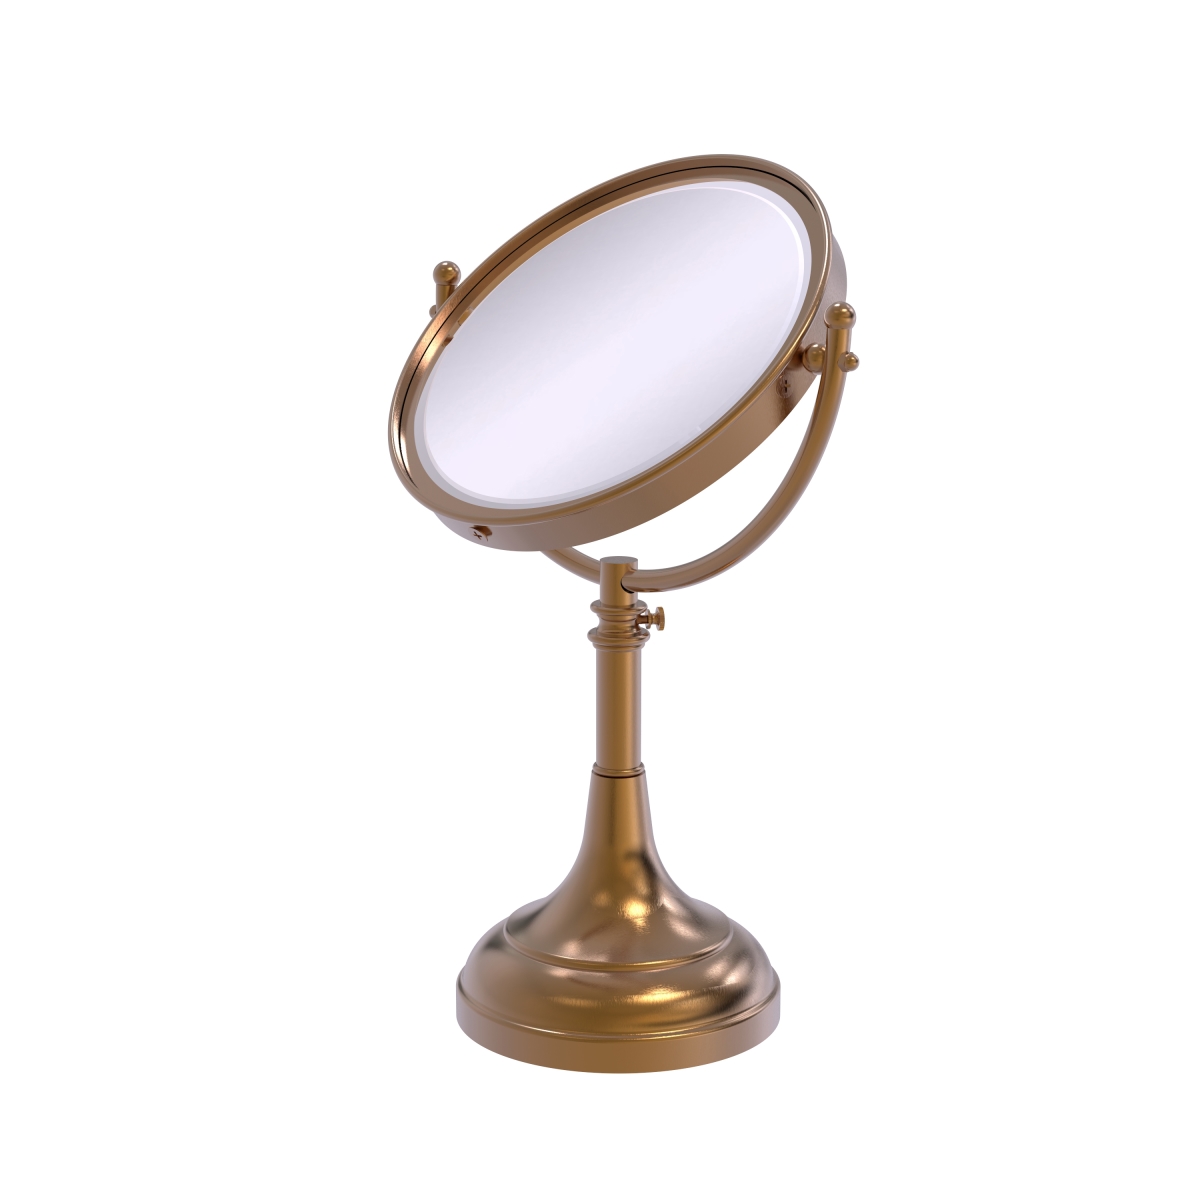 Dm-1-2x-bbr Height Adjustable 8 In. Vanity Top Make-up Mirror 2x Magnification, Brushed Bronze